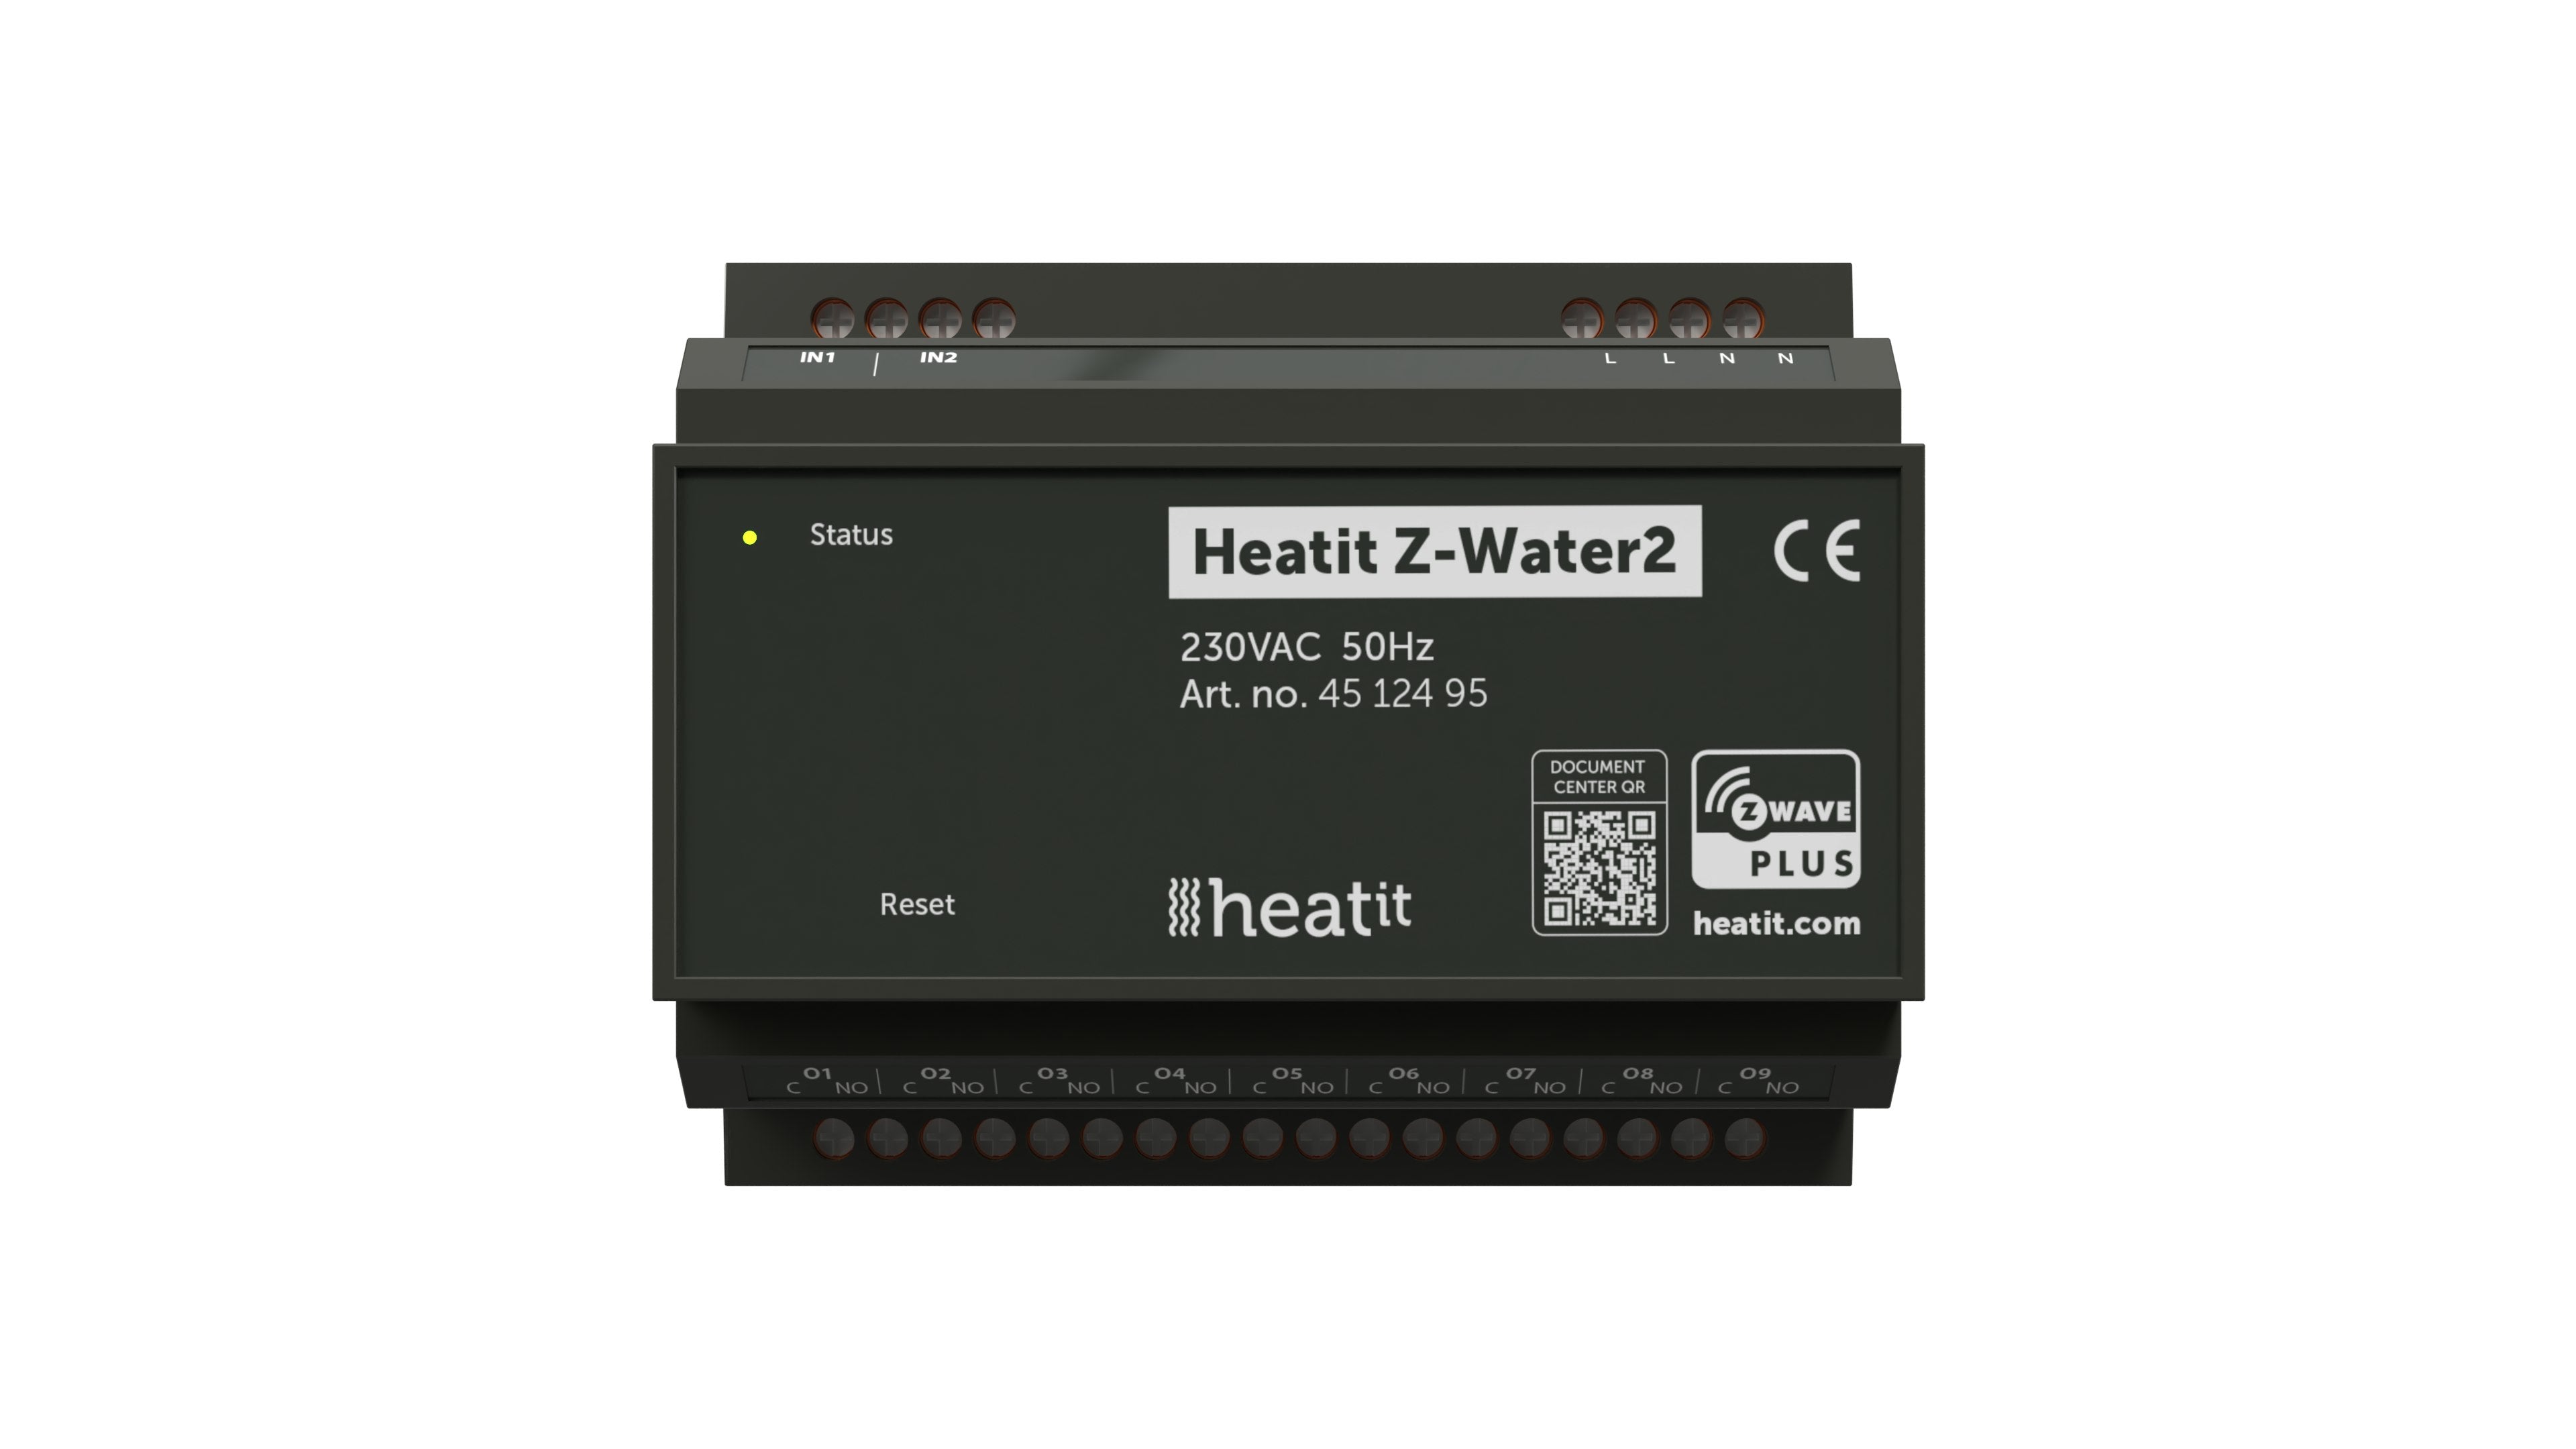 Heatit Z-Water2 Z-Wave Wet Underfloor Heating Controller